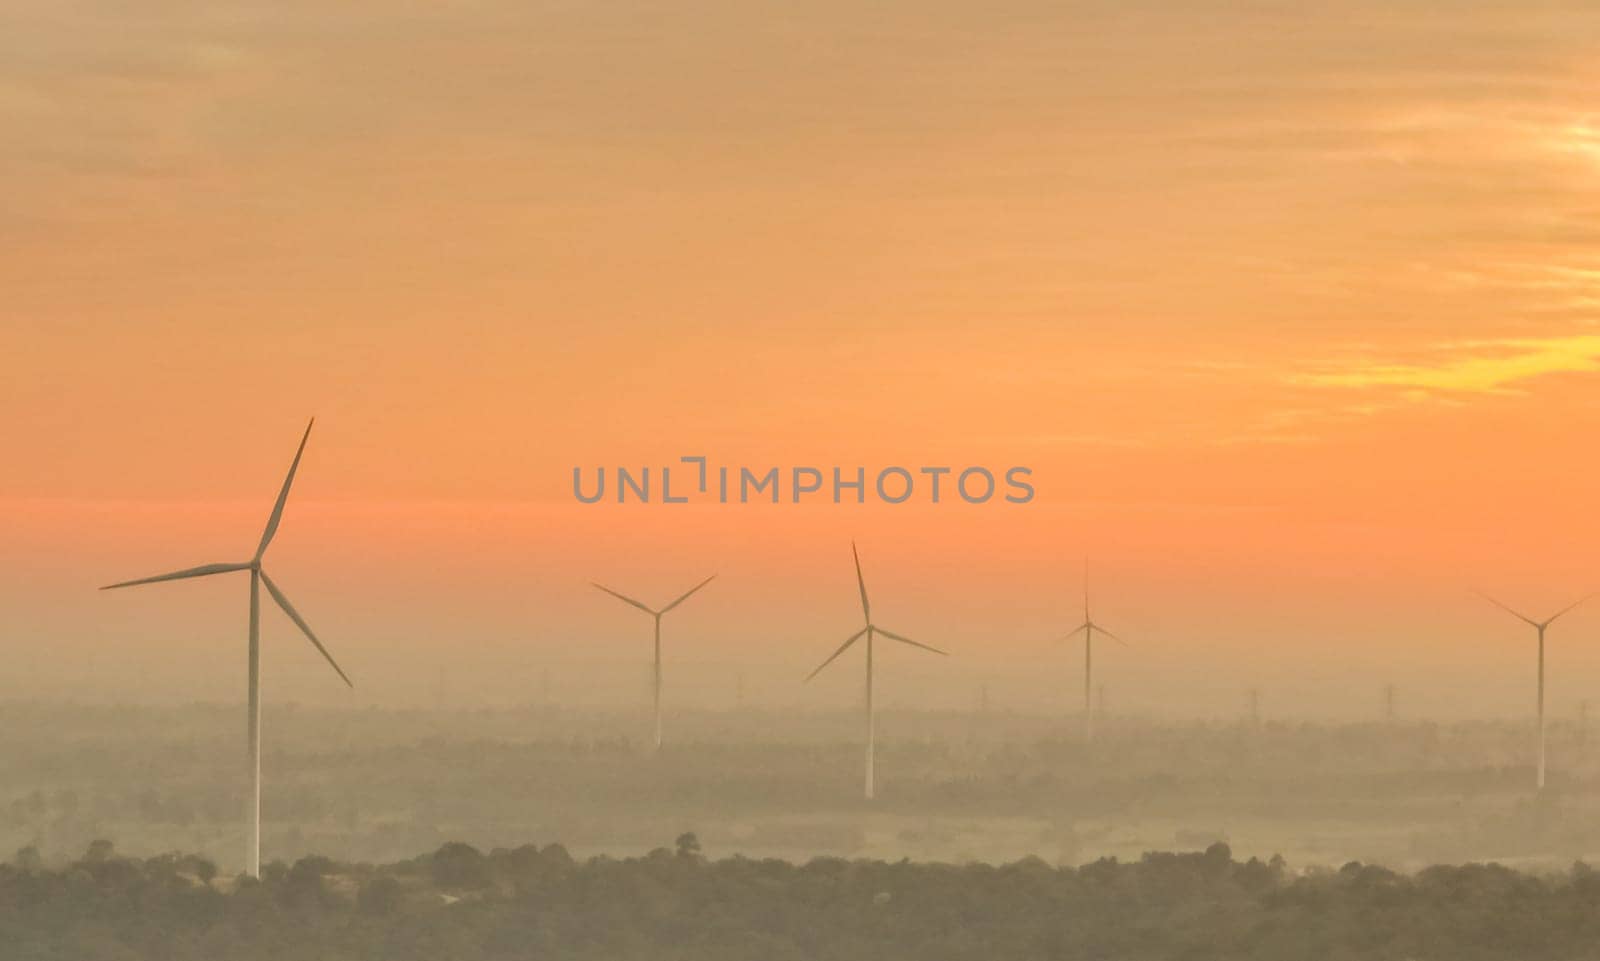 Landscape wind farm with sunrise sky. Sustainable renewable energy. Wind power for sustainability. Green technology. Sustainable development. Wind turbines generate electricity. Energy sustainability.